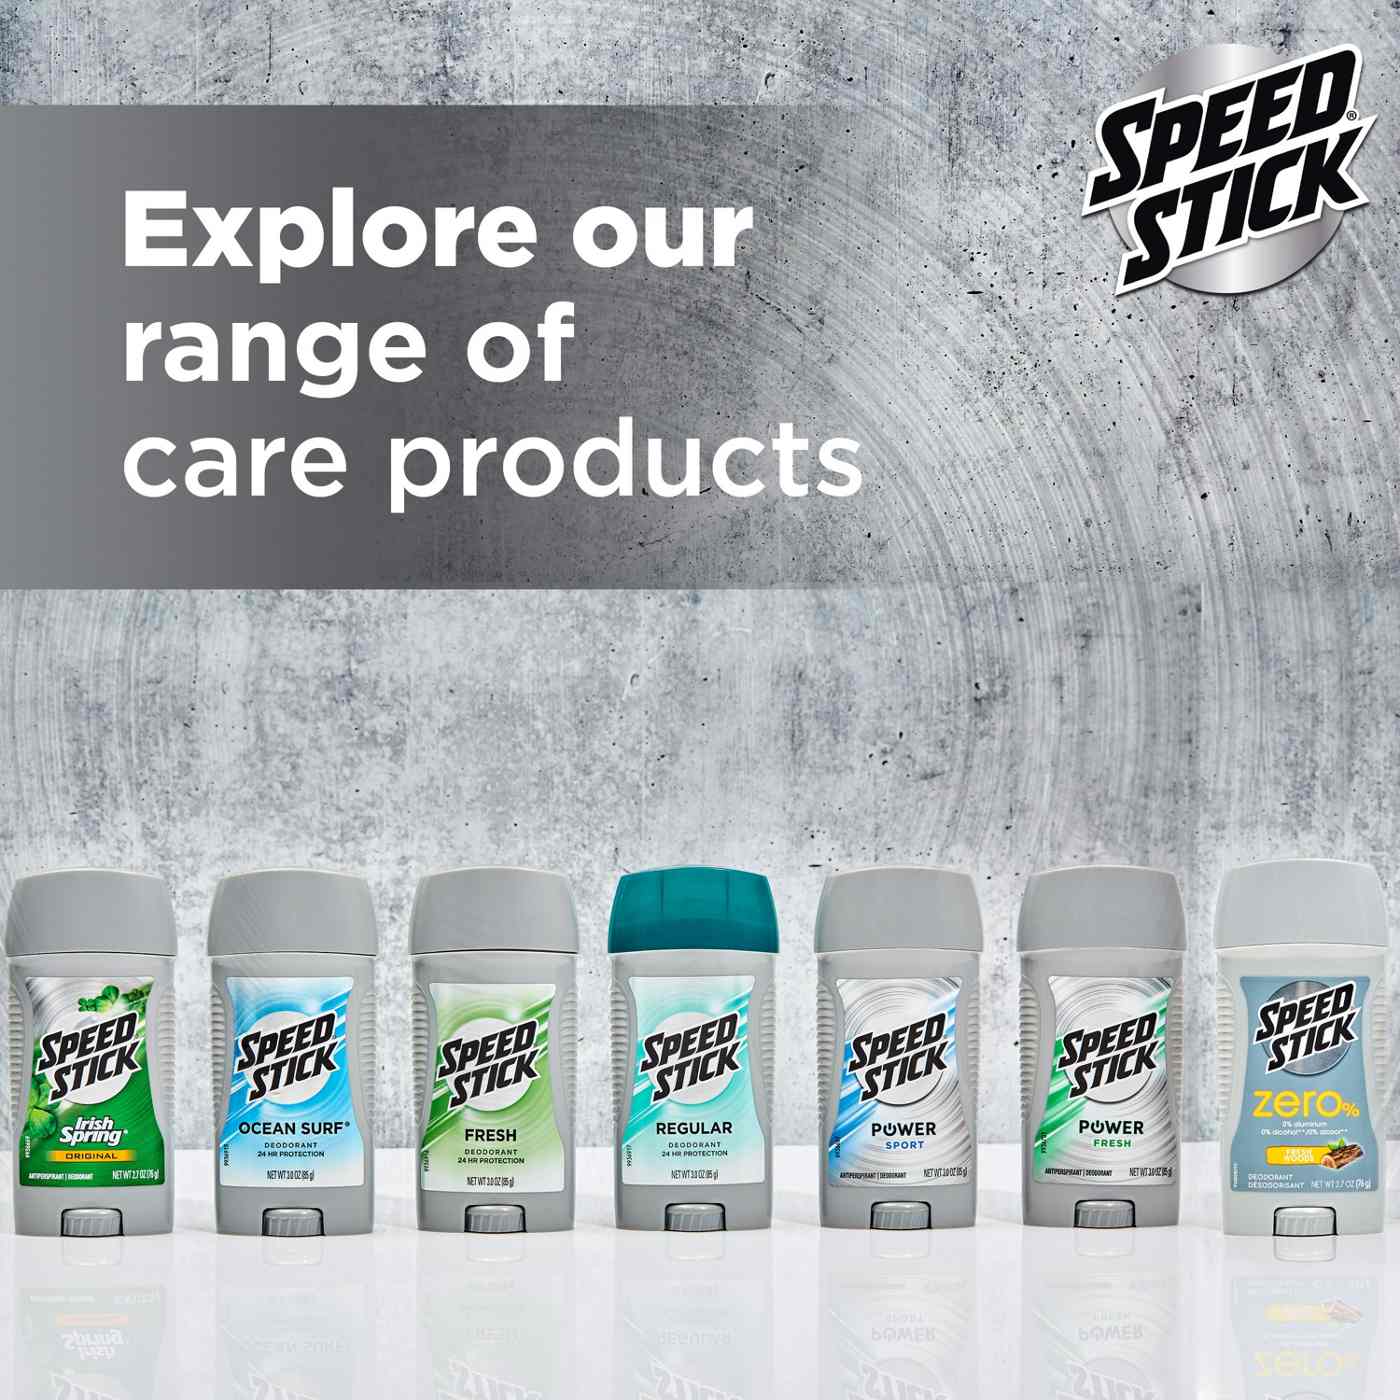 Speed Stick Deodorant - Regular; image 6 of 10